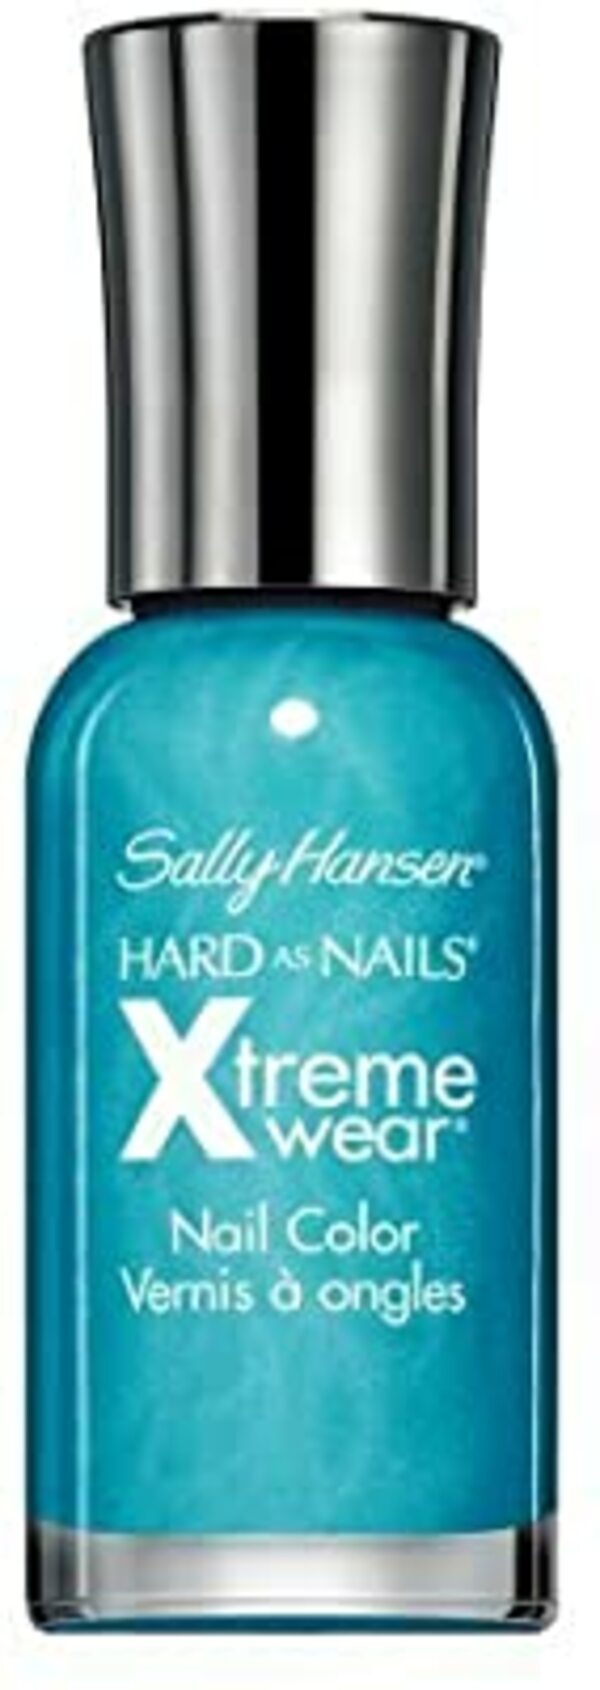 Nail polish swatch / manicure of shade Sally Hansen Blizzard Blue